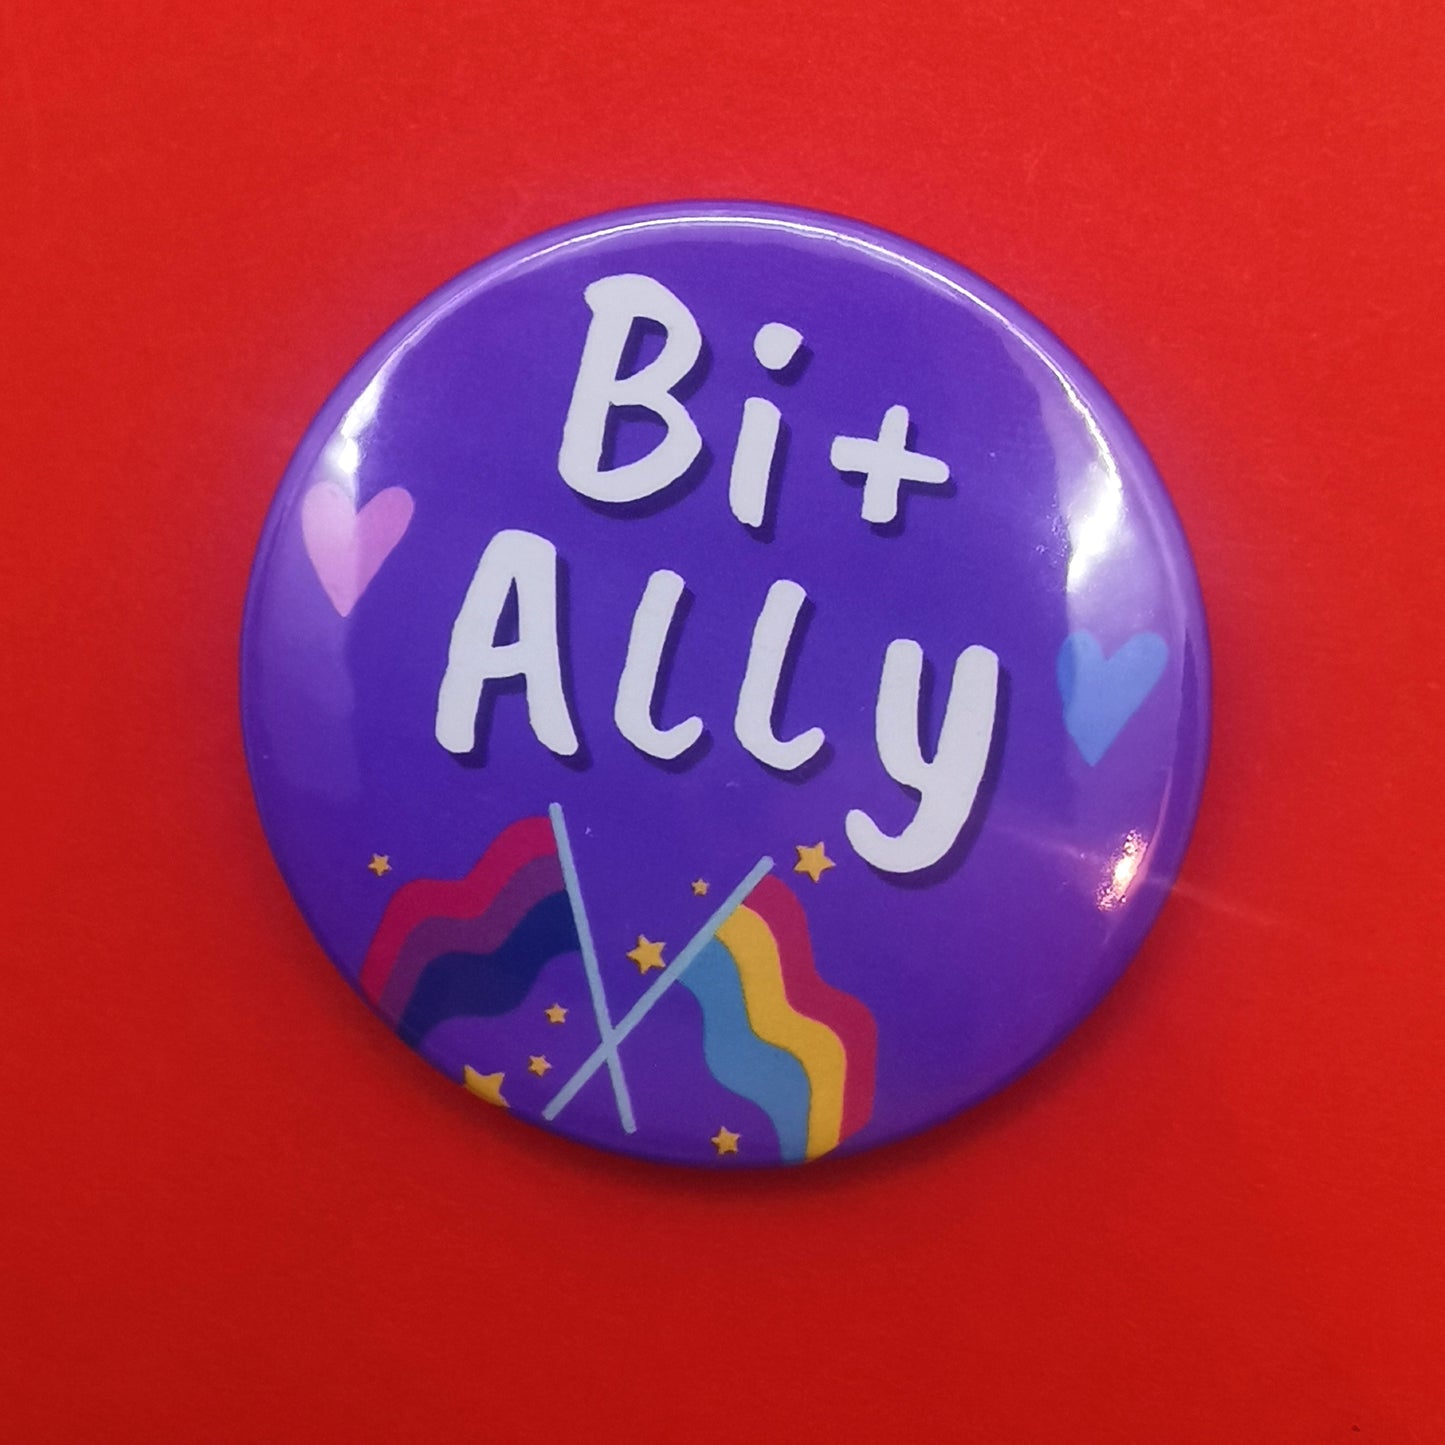 Ally badges